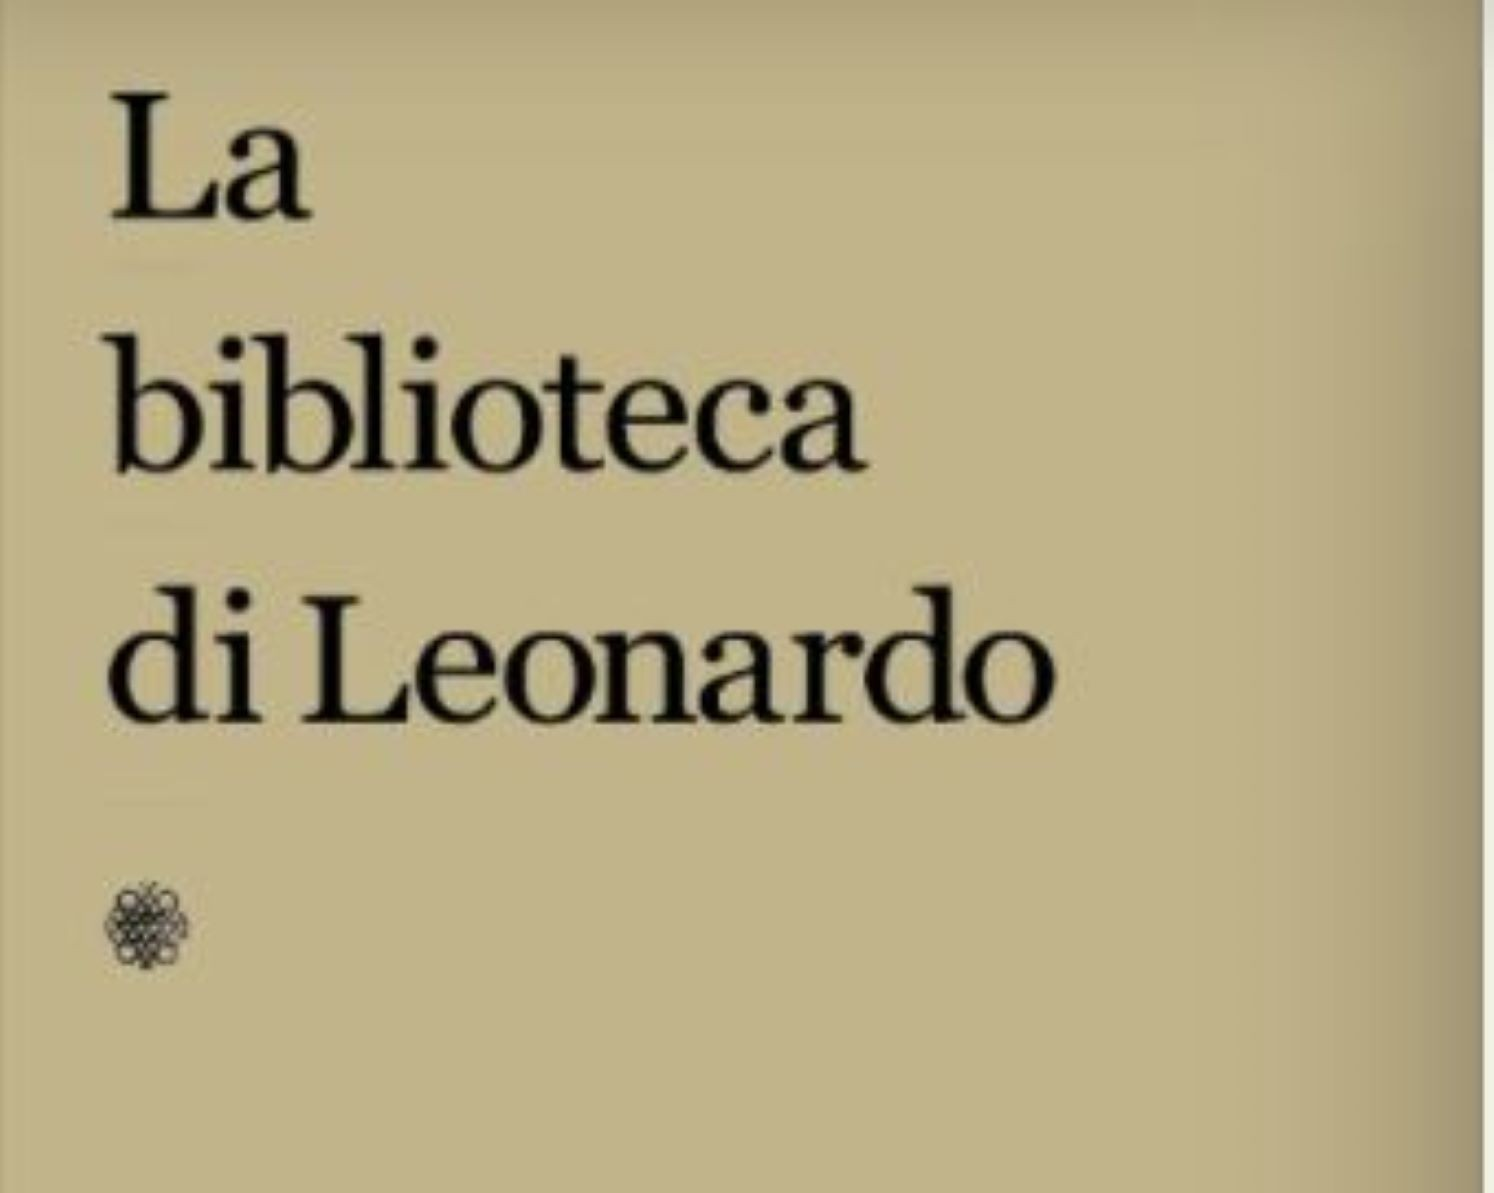 La Biblioteca di Leonardo with contributions by Dr. Steven Stowell